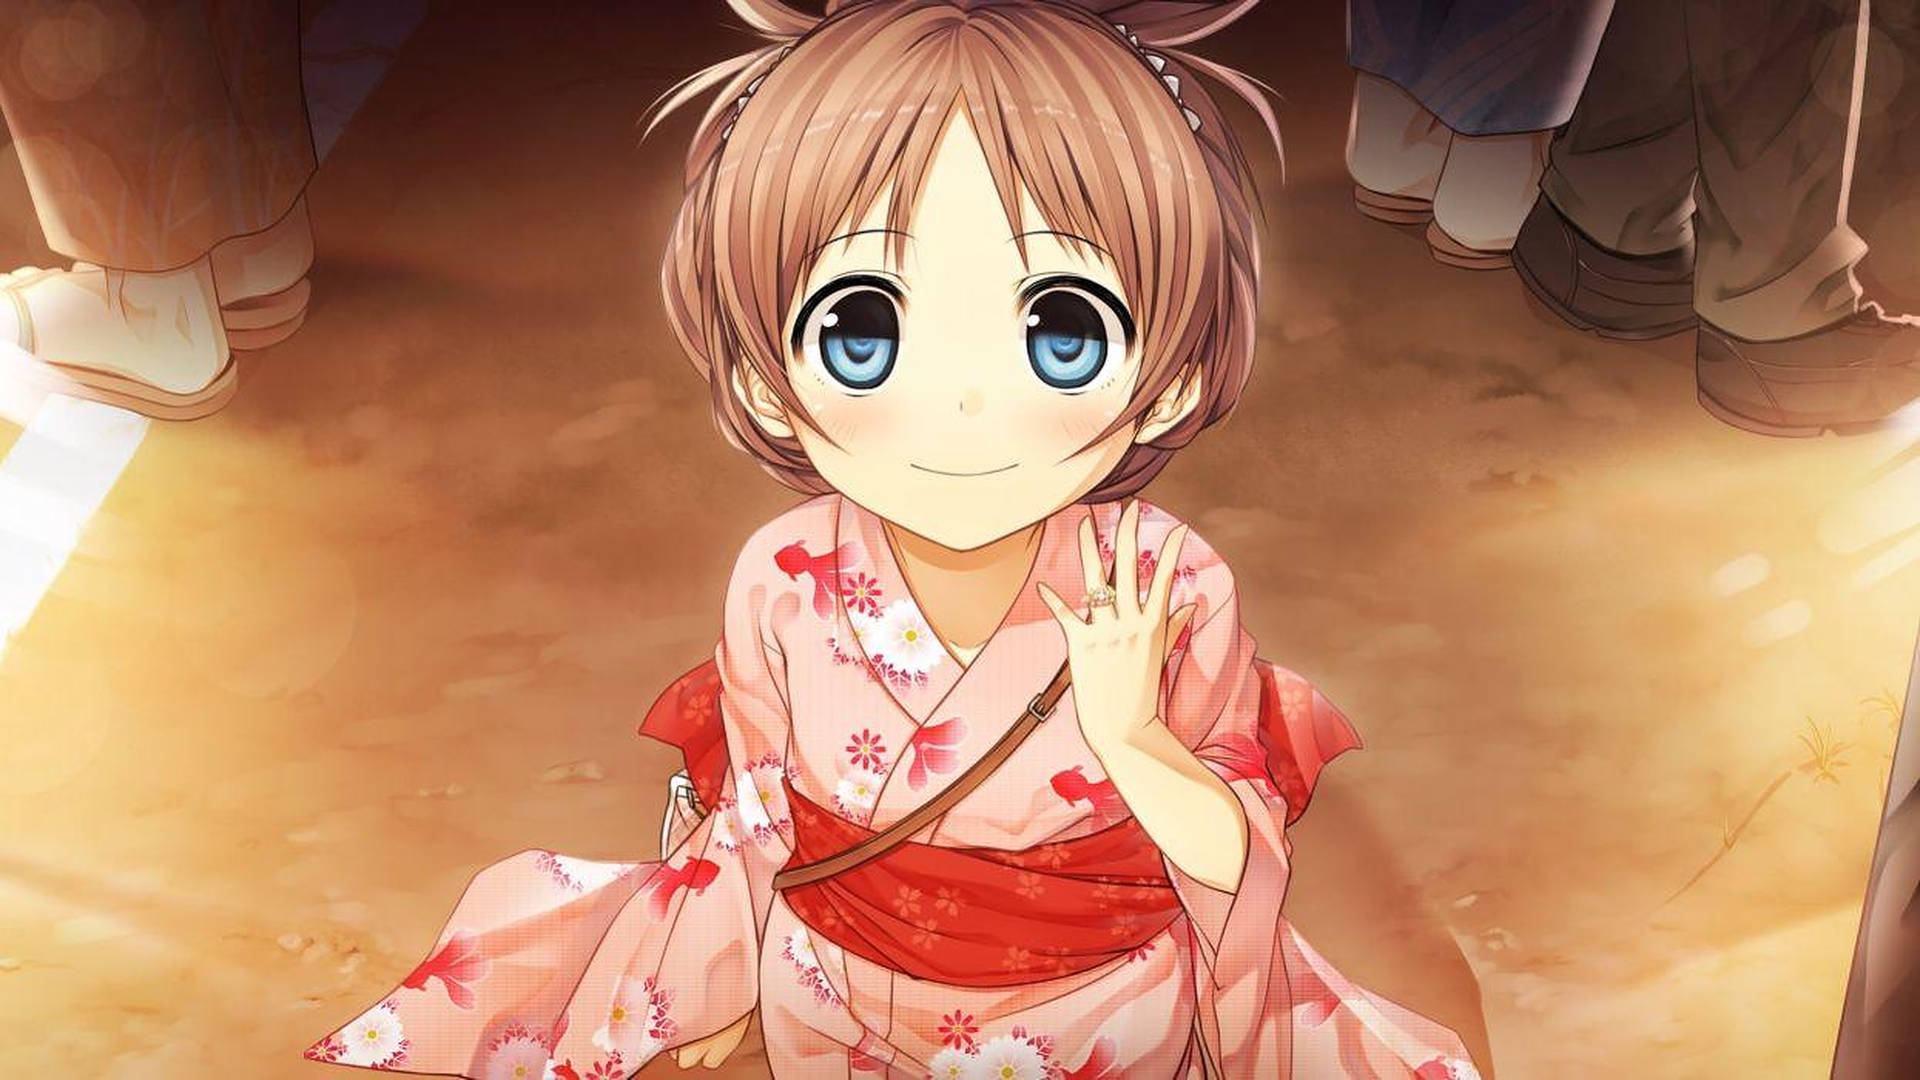 Anime Kid In Red Kimono